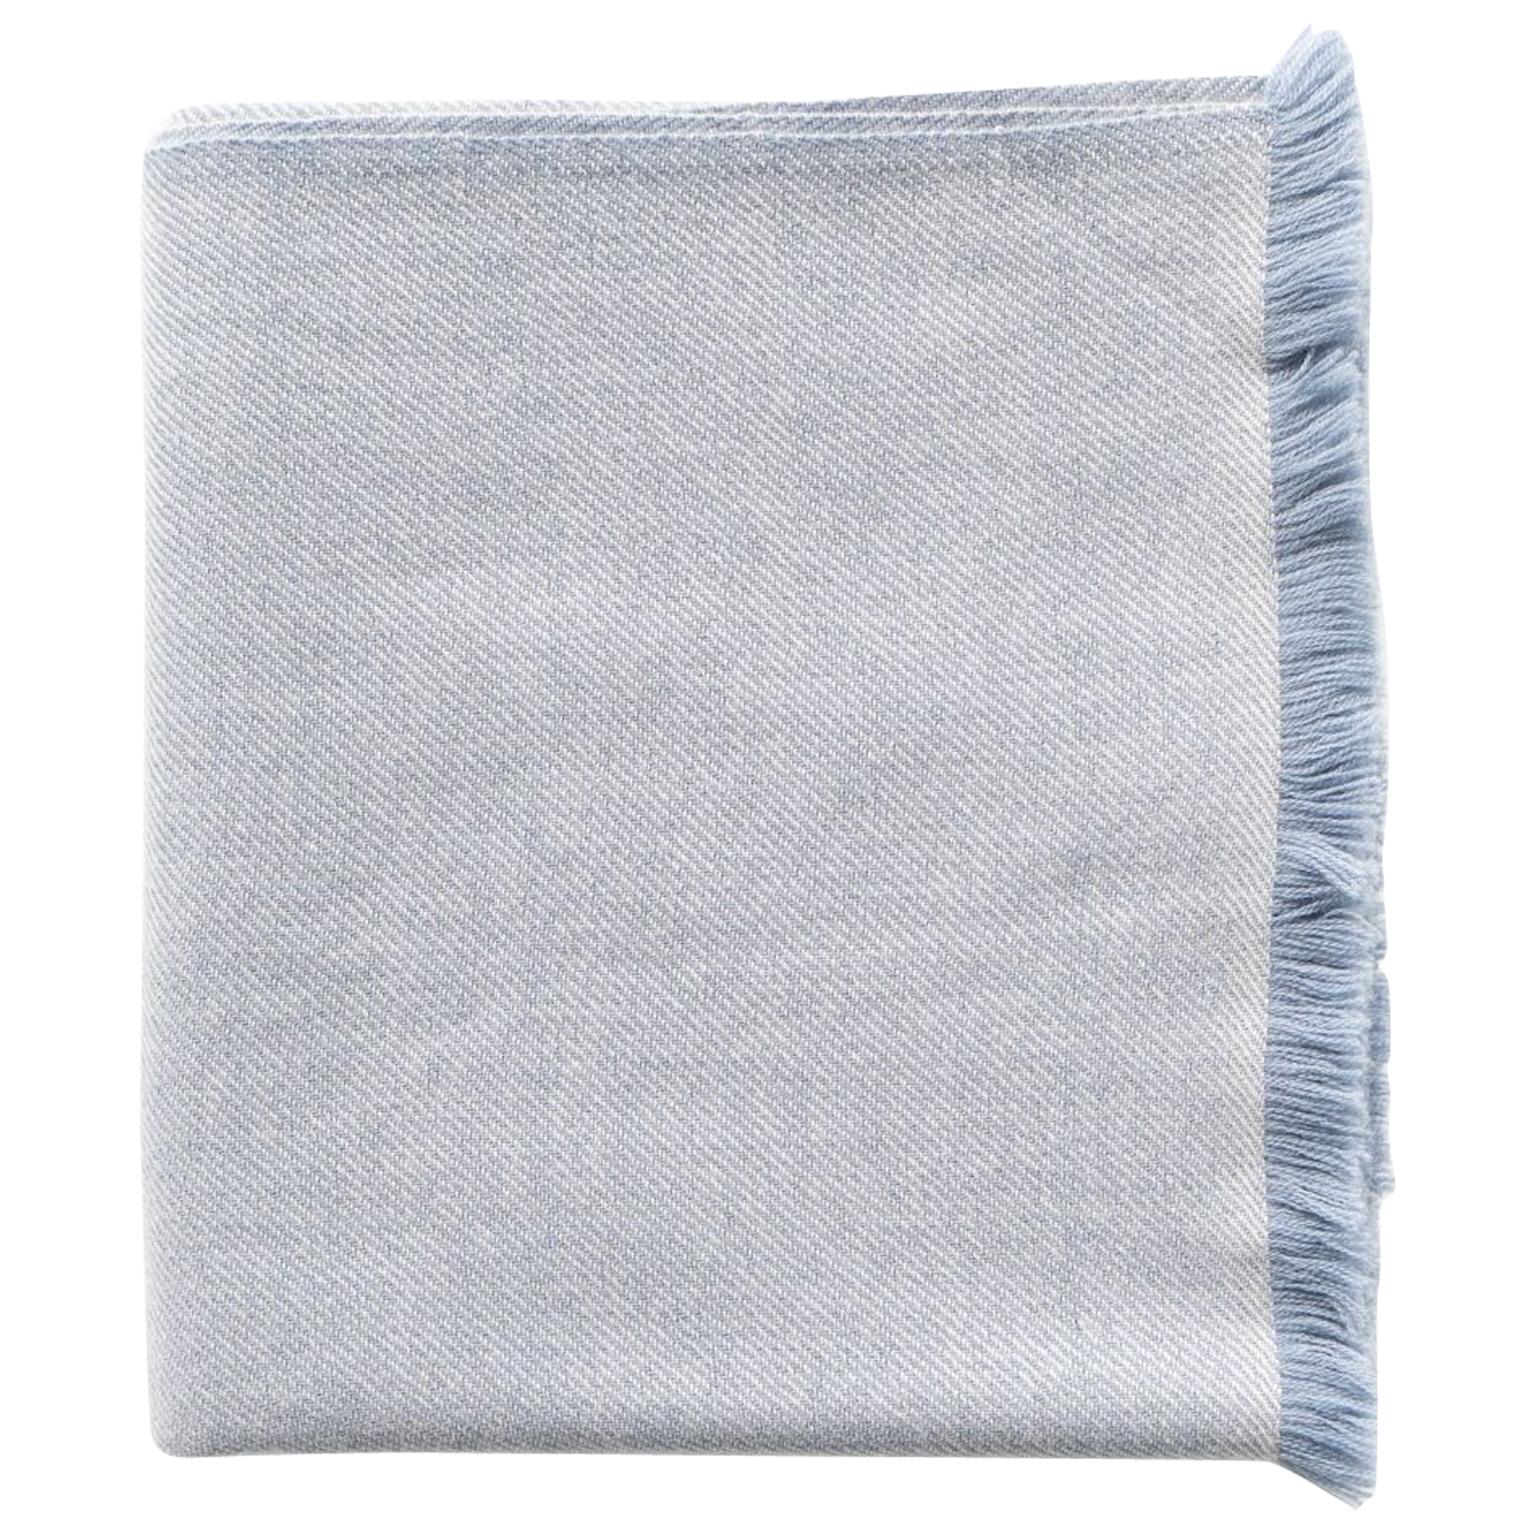 BORO Blue Shade Handloom Throw / Blanket In Pure Soft Merino Twill Weave